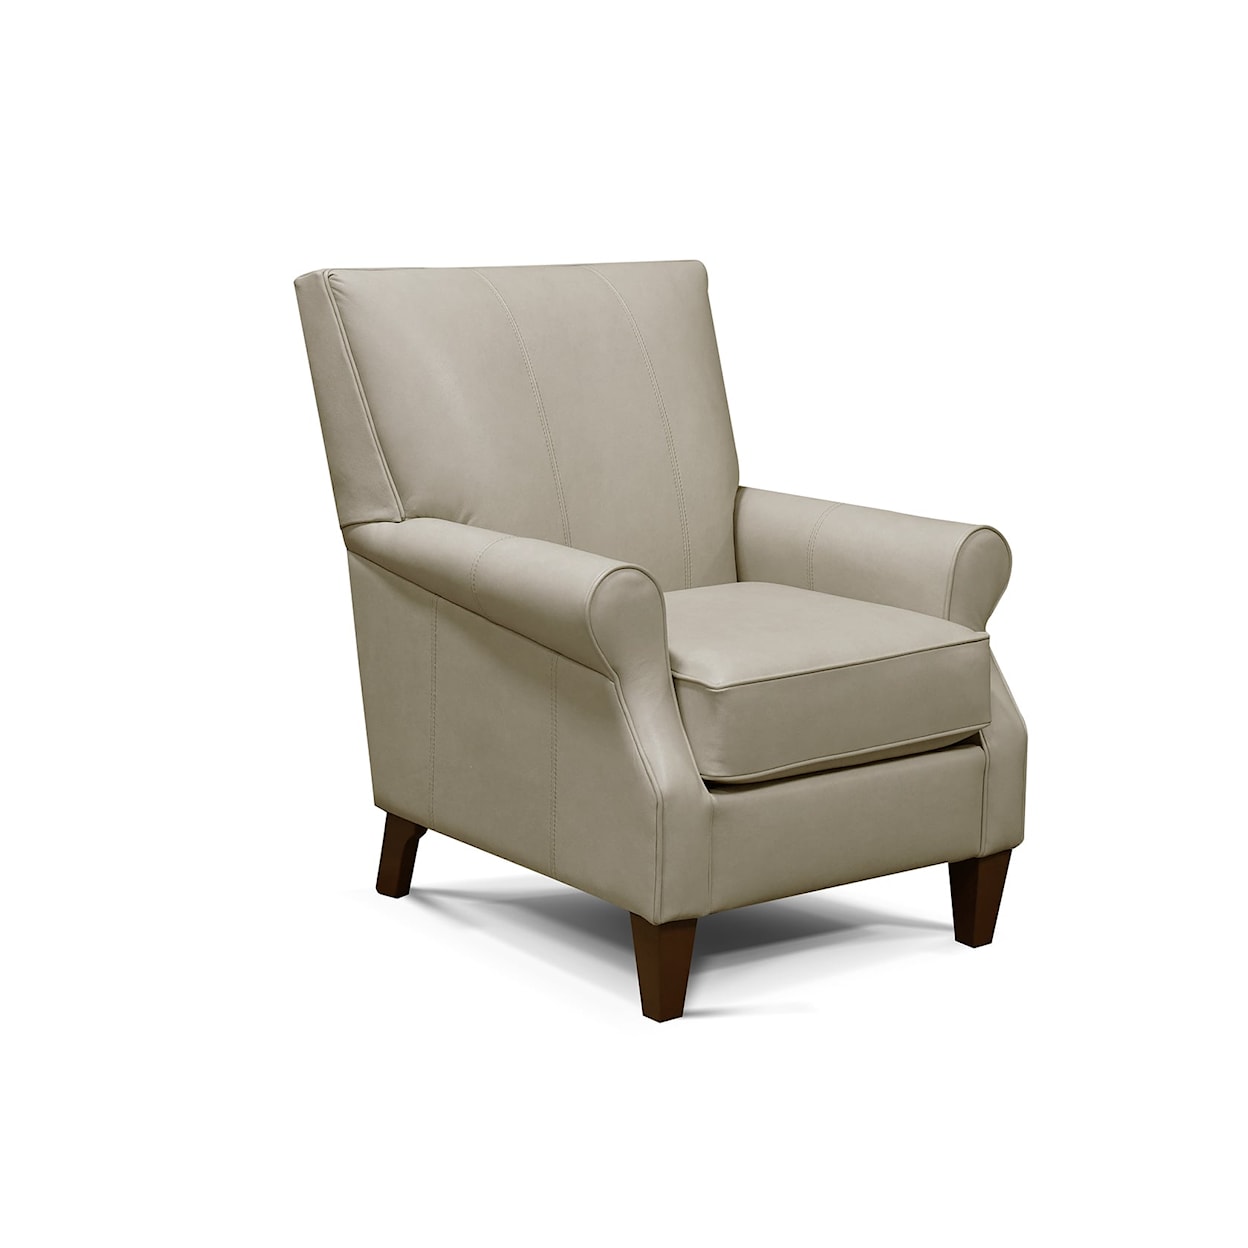 England 5D00/5D70/AL Series Leather Accent Chair